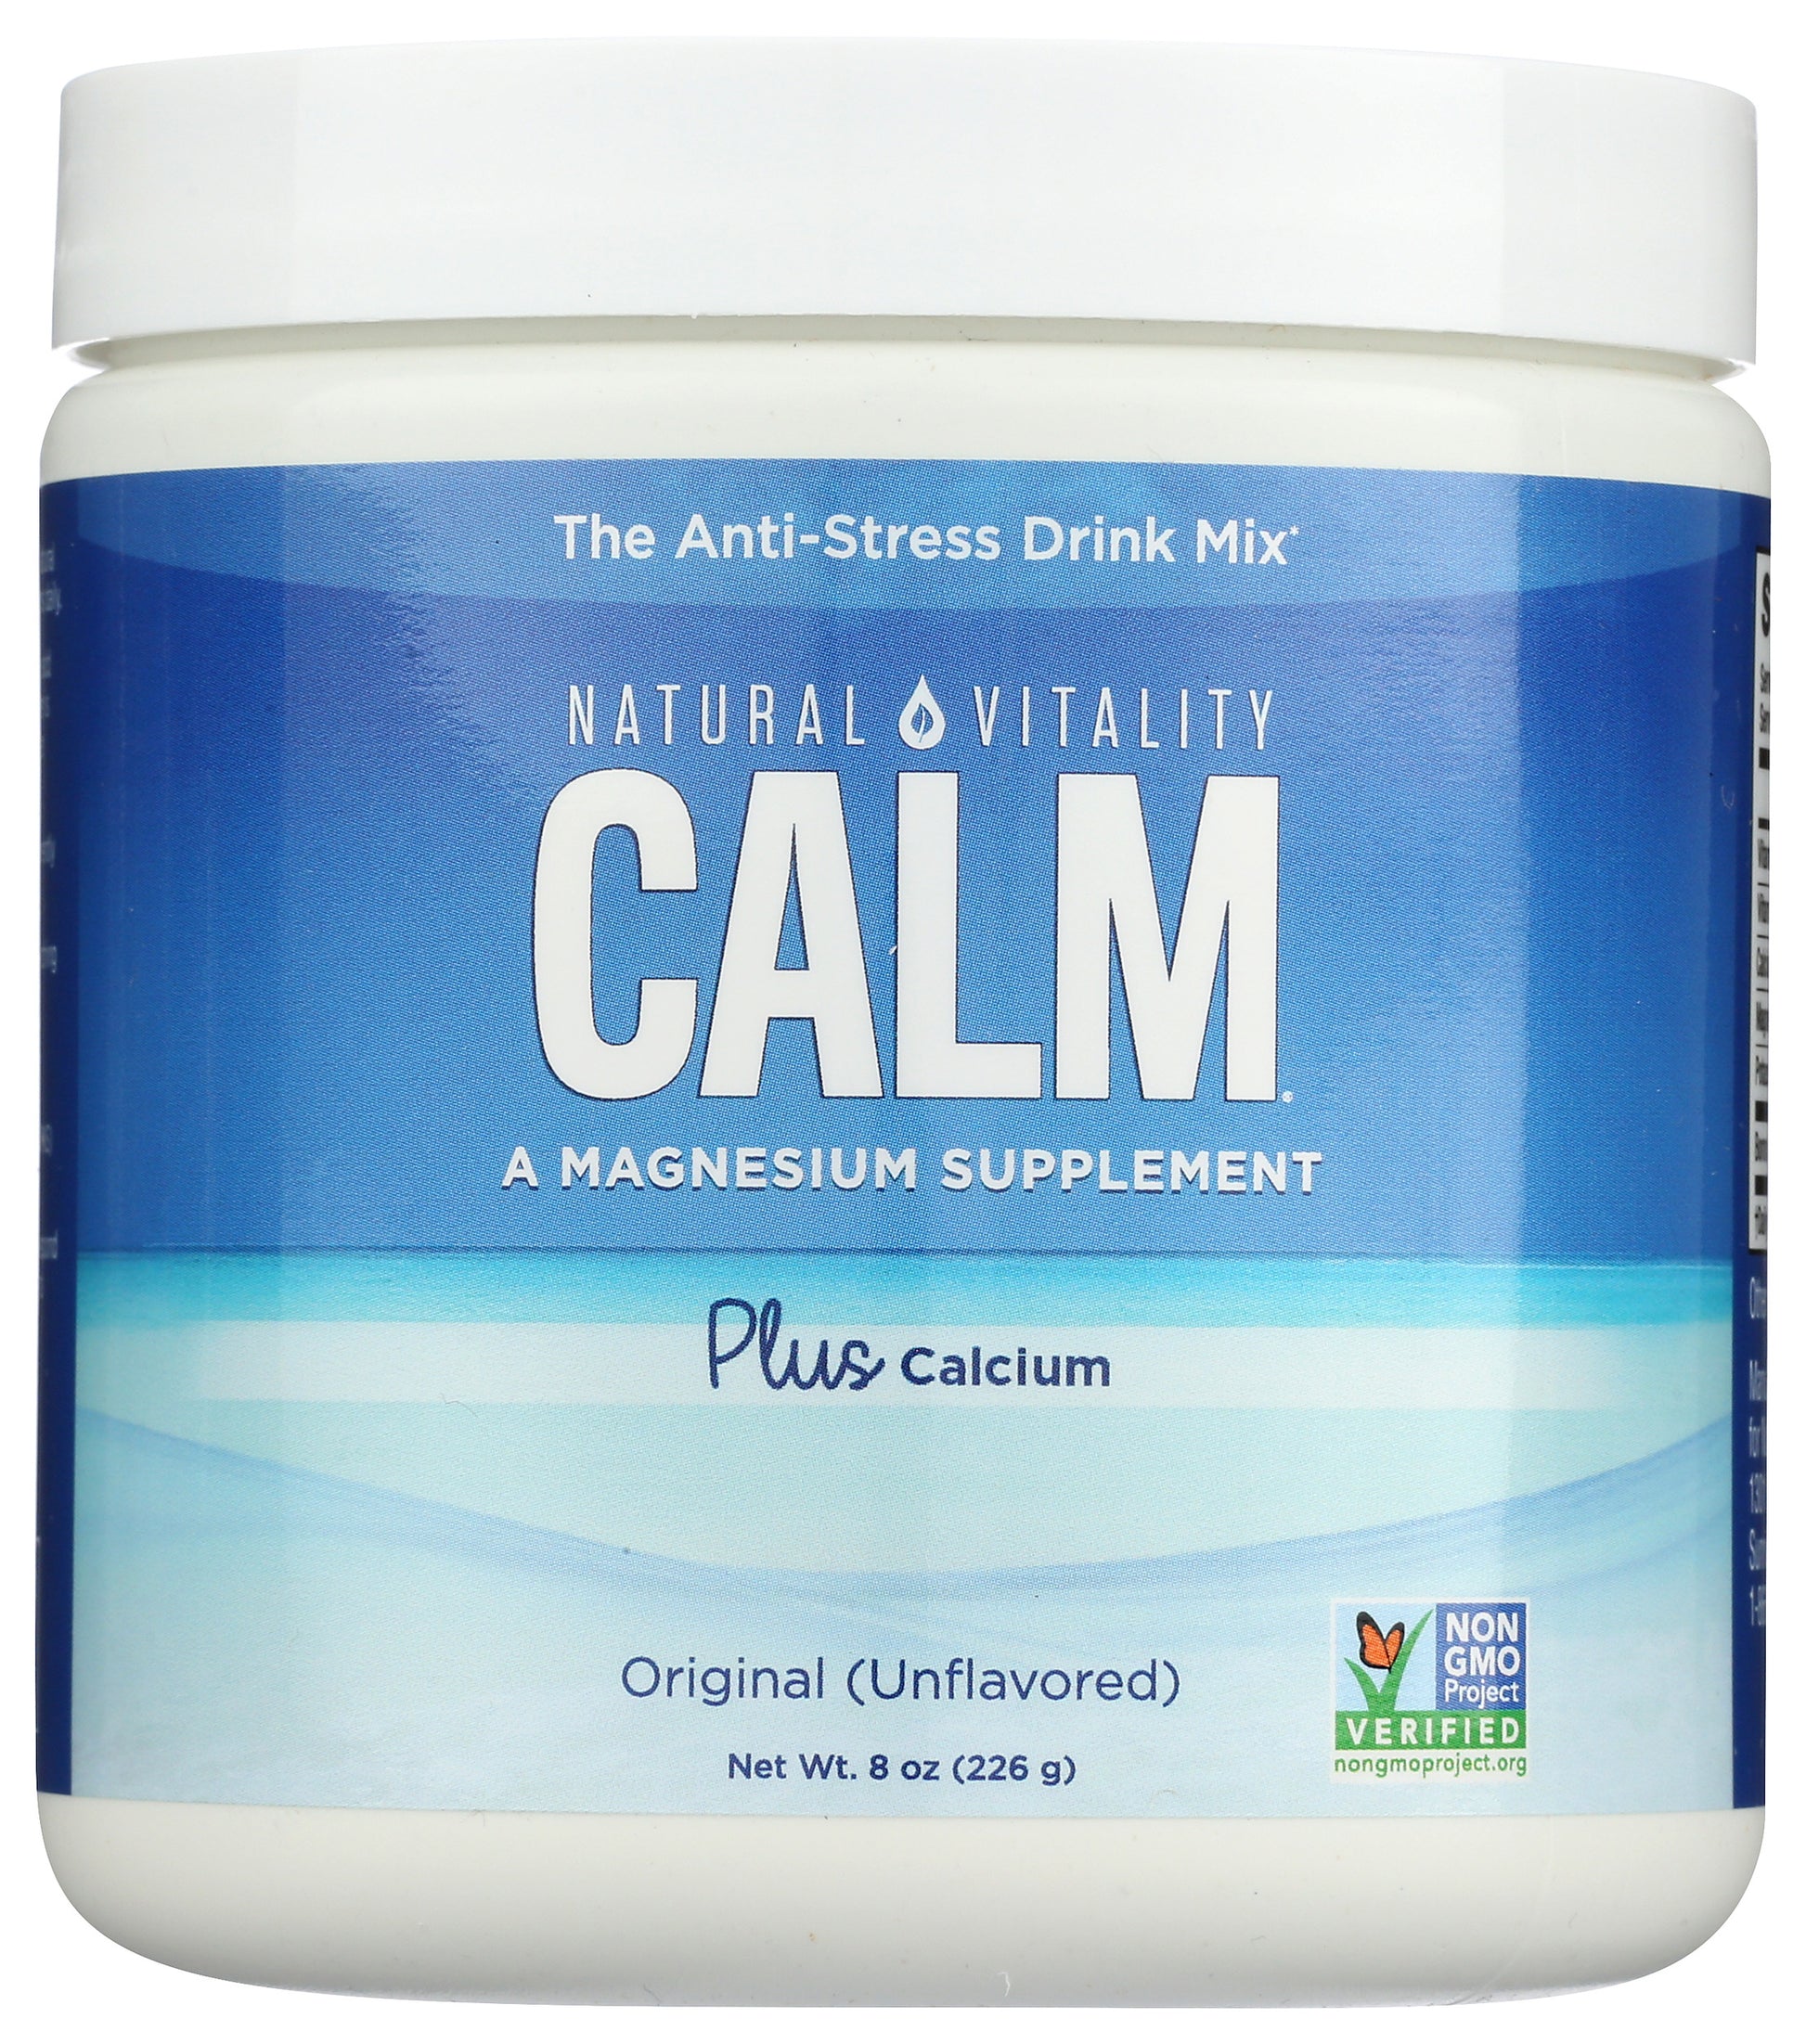 Natural Vitality Calm Magnesium Supplement Plus Calcium 8oz Front of Bottle